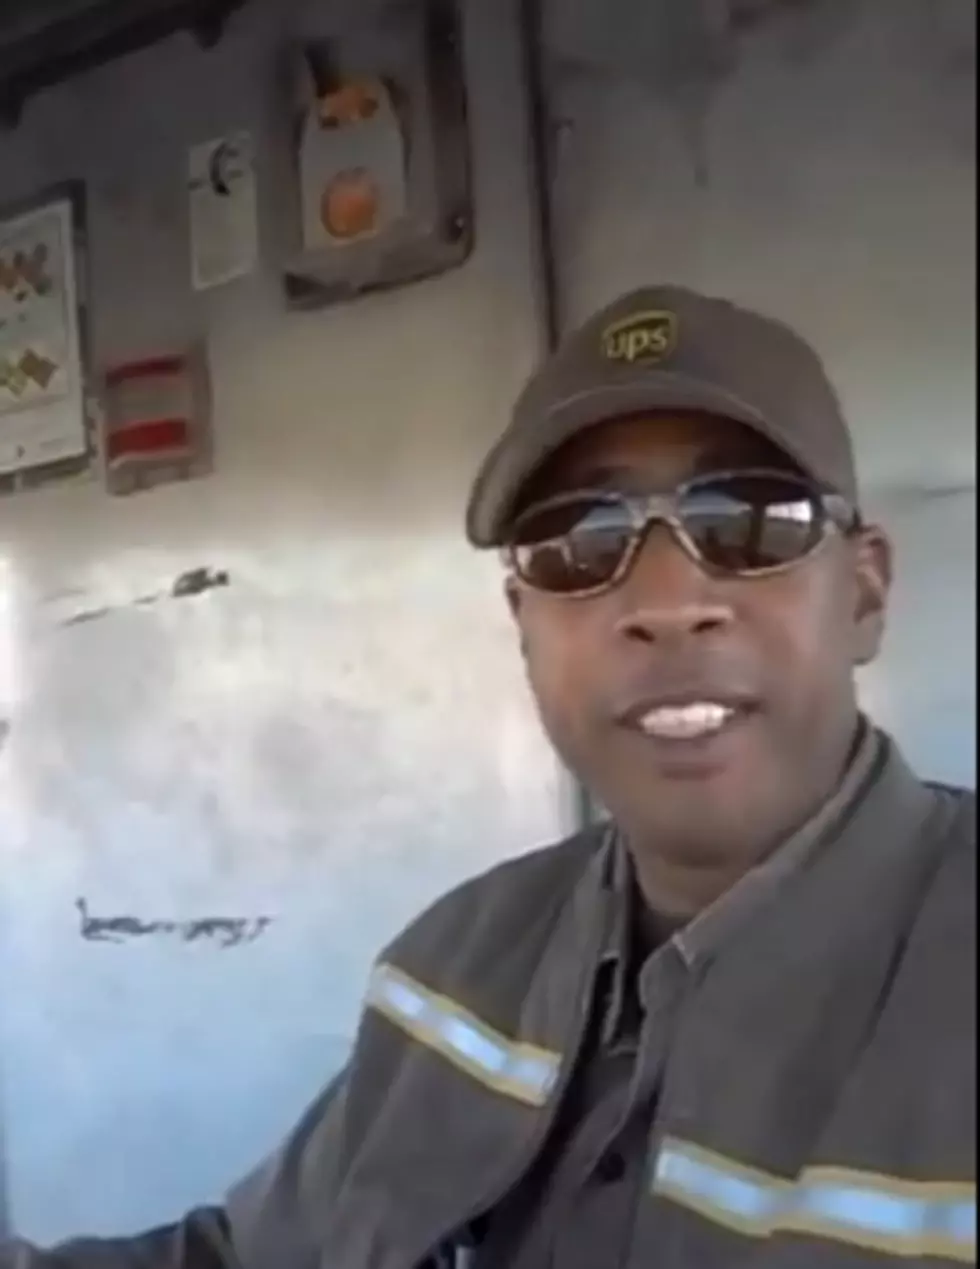 UPS Man Sings Hilarious Holiday Jingle [VIDEO]